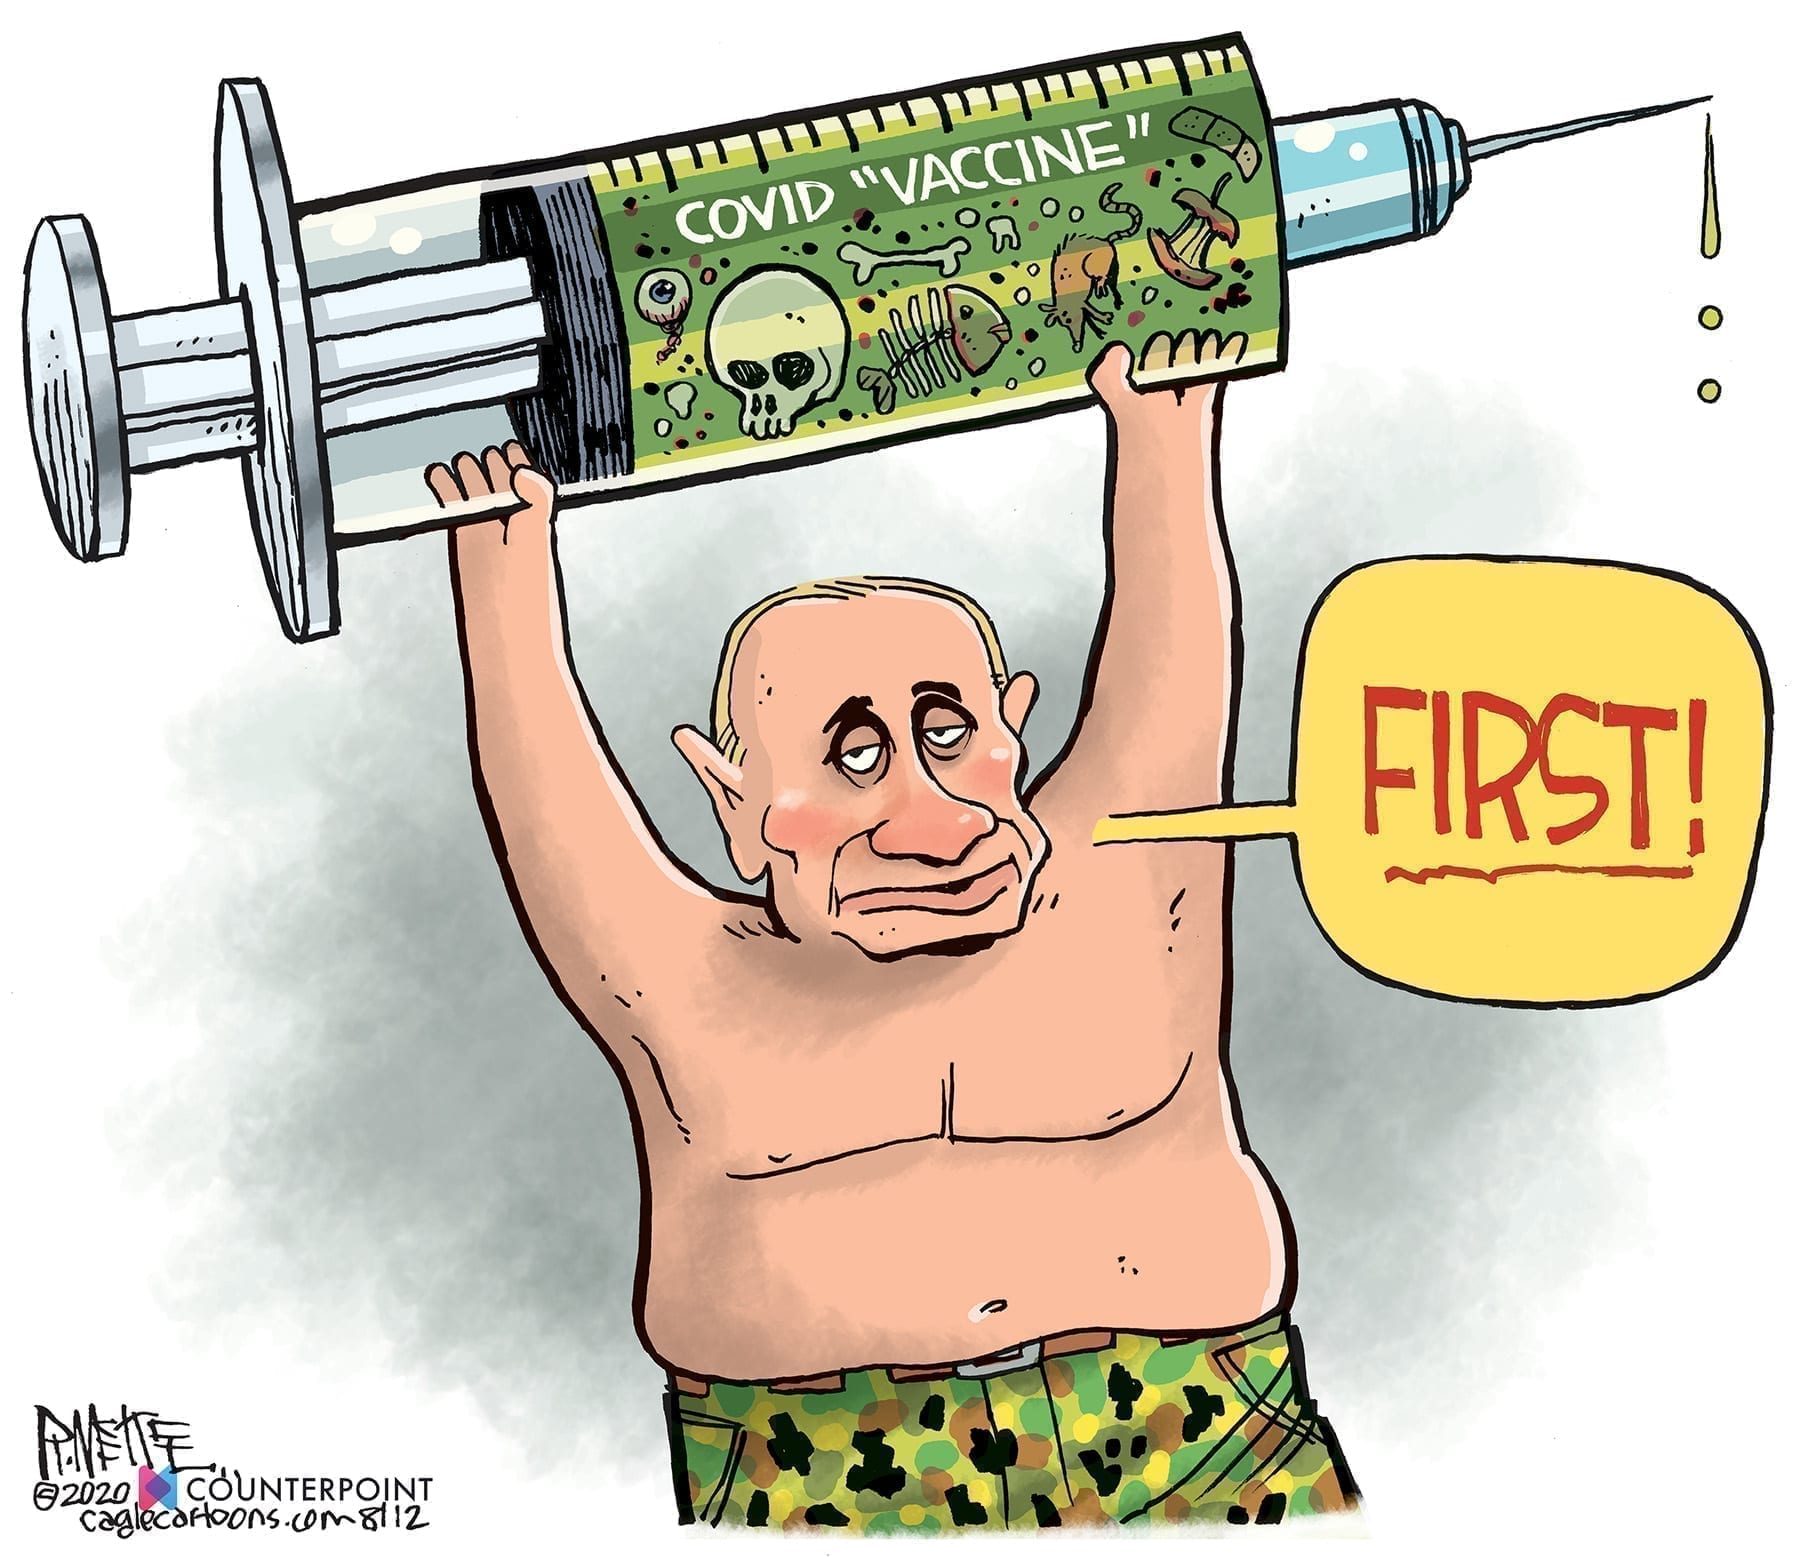 Putin Covid Vaccine